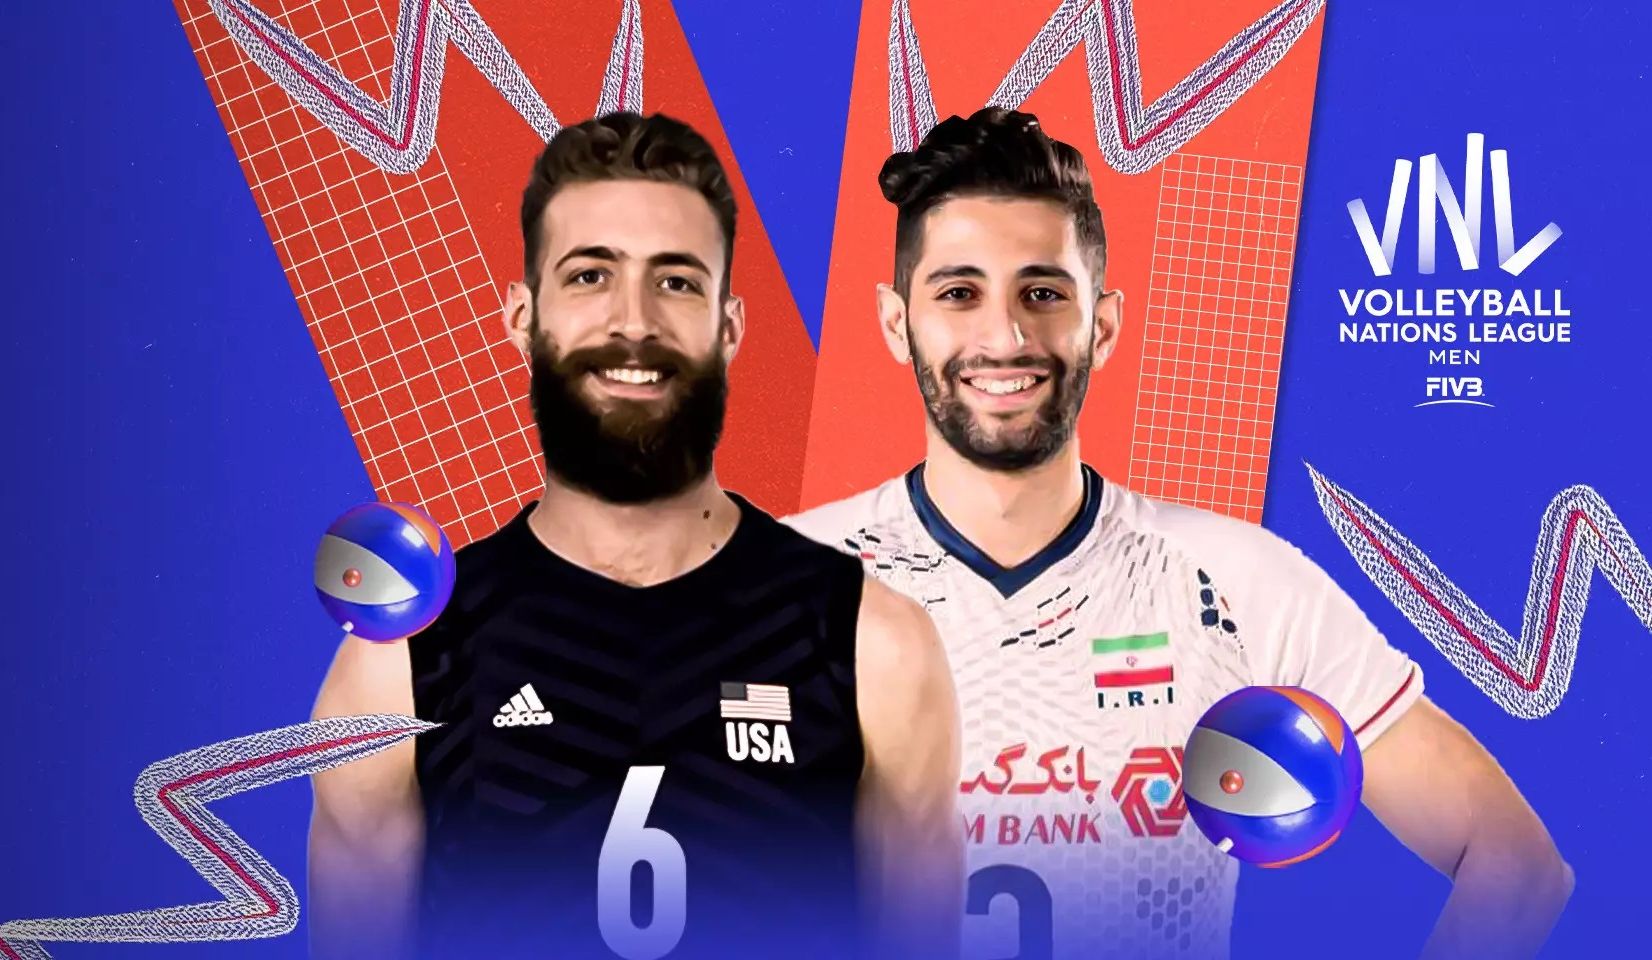 Jadwal Pertandingan Volleyball Nations League 2022 Amerika Serikat vs Iran, Berikut Link Live Streaming